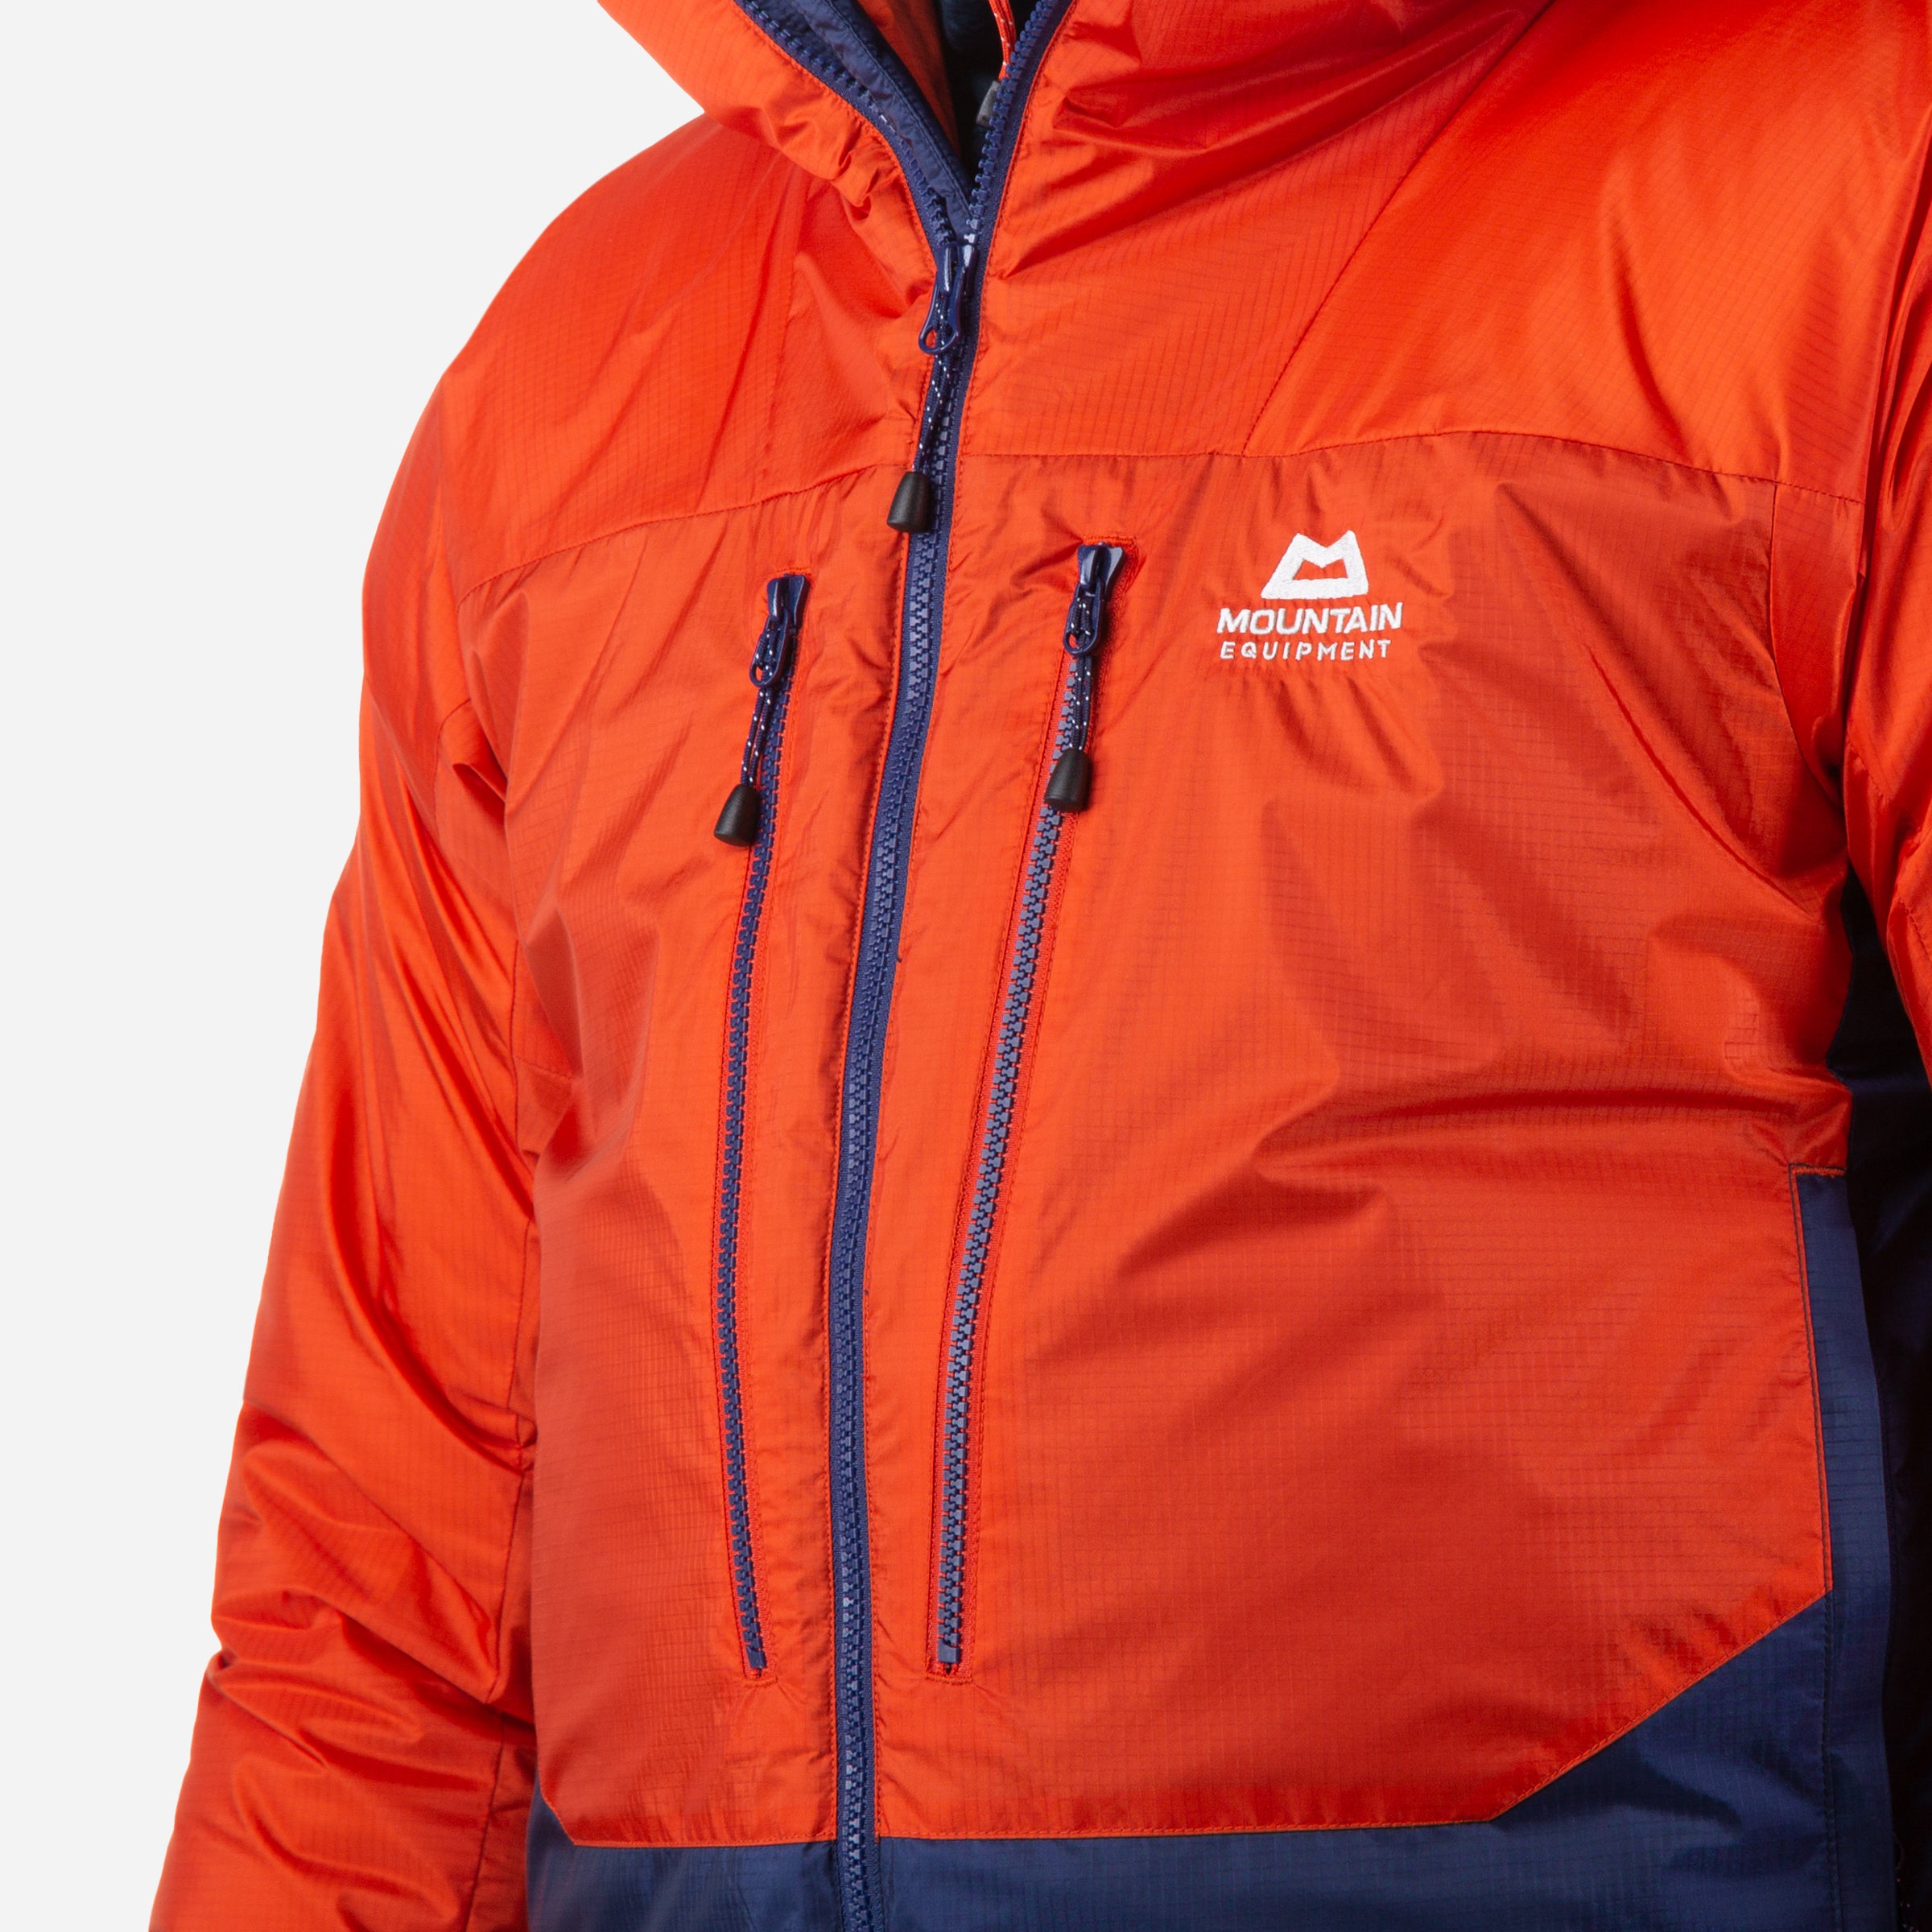 Climb GB | Mountain Equipment Shield Jacket Review